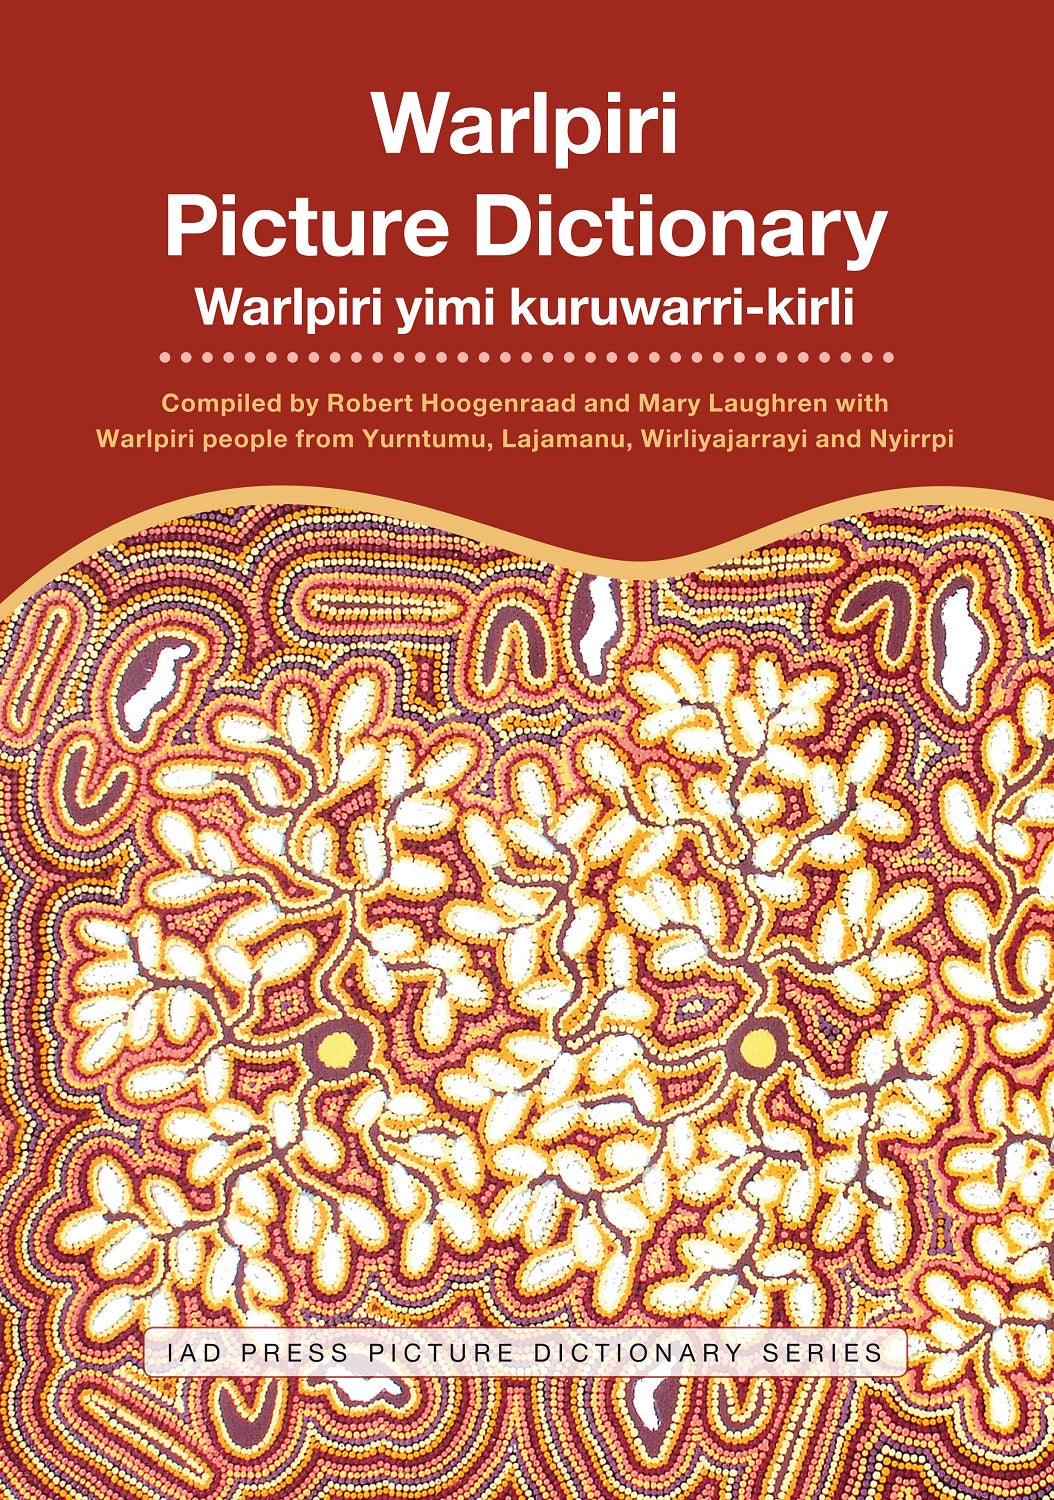 Warlpiri Picture Dictionary | IAD Press | Australian Aboriginal Publisher & Book Shop